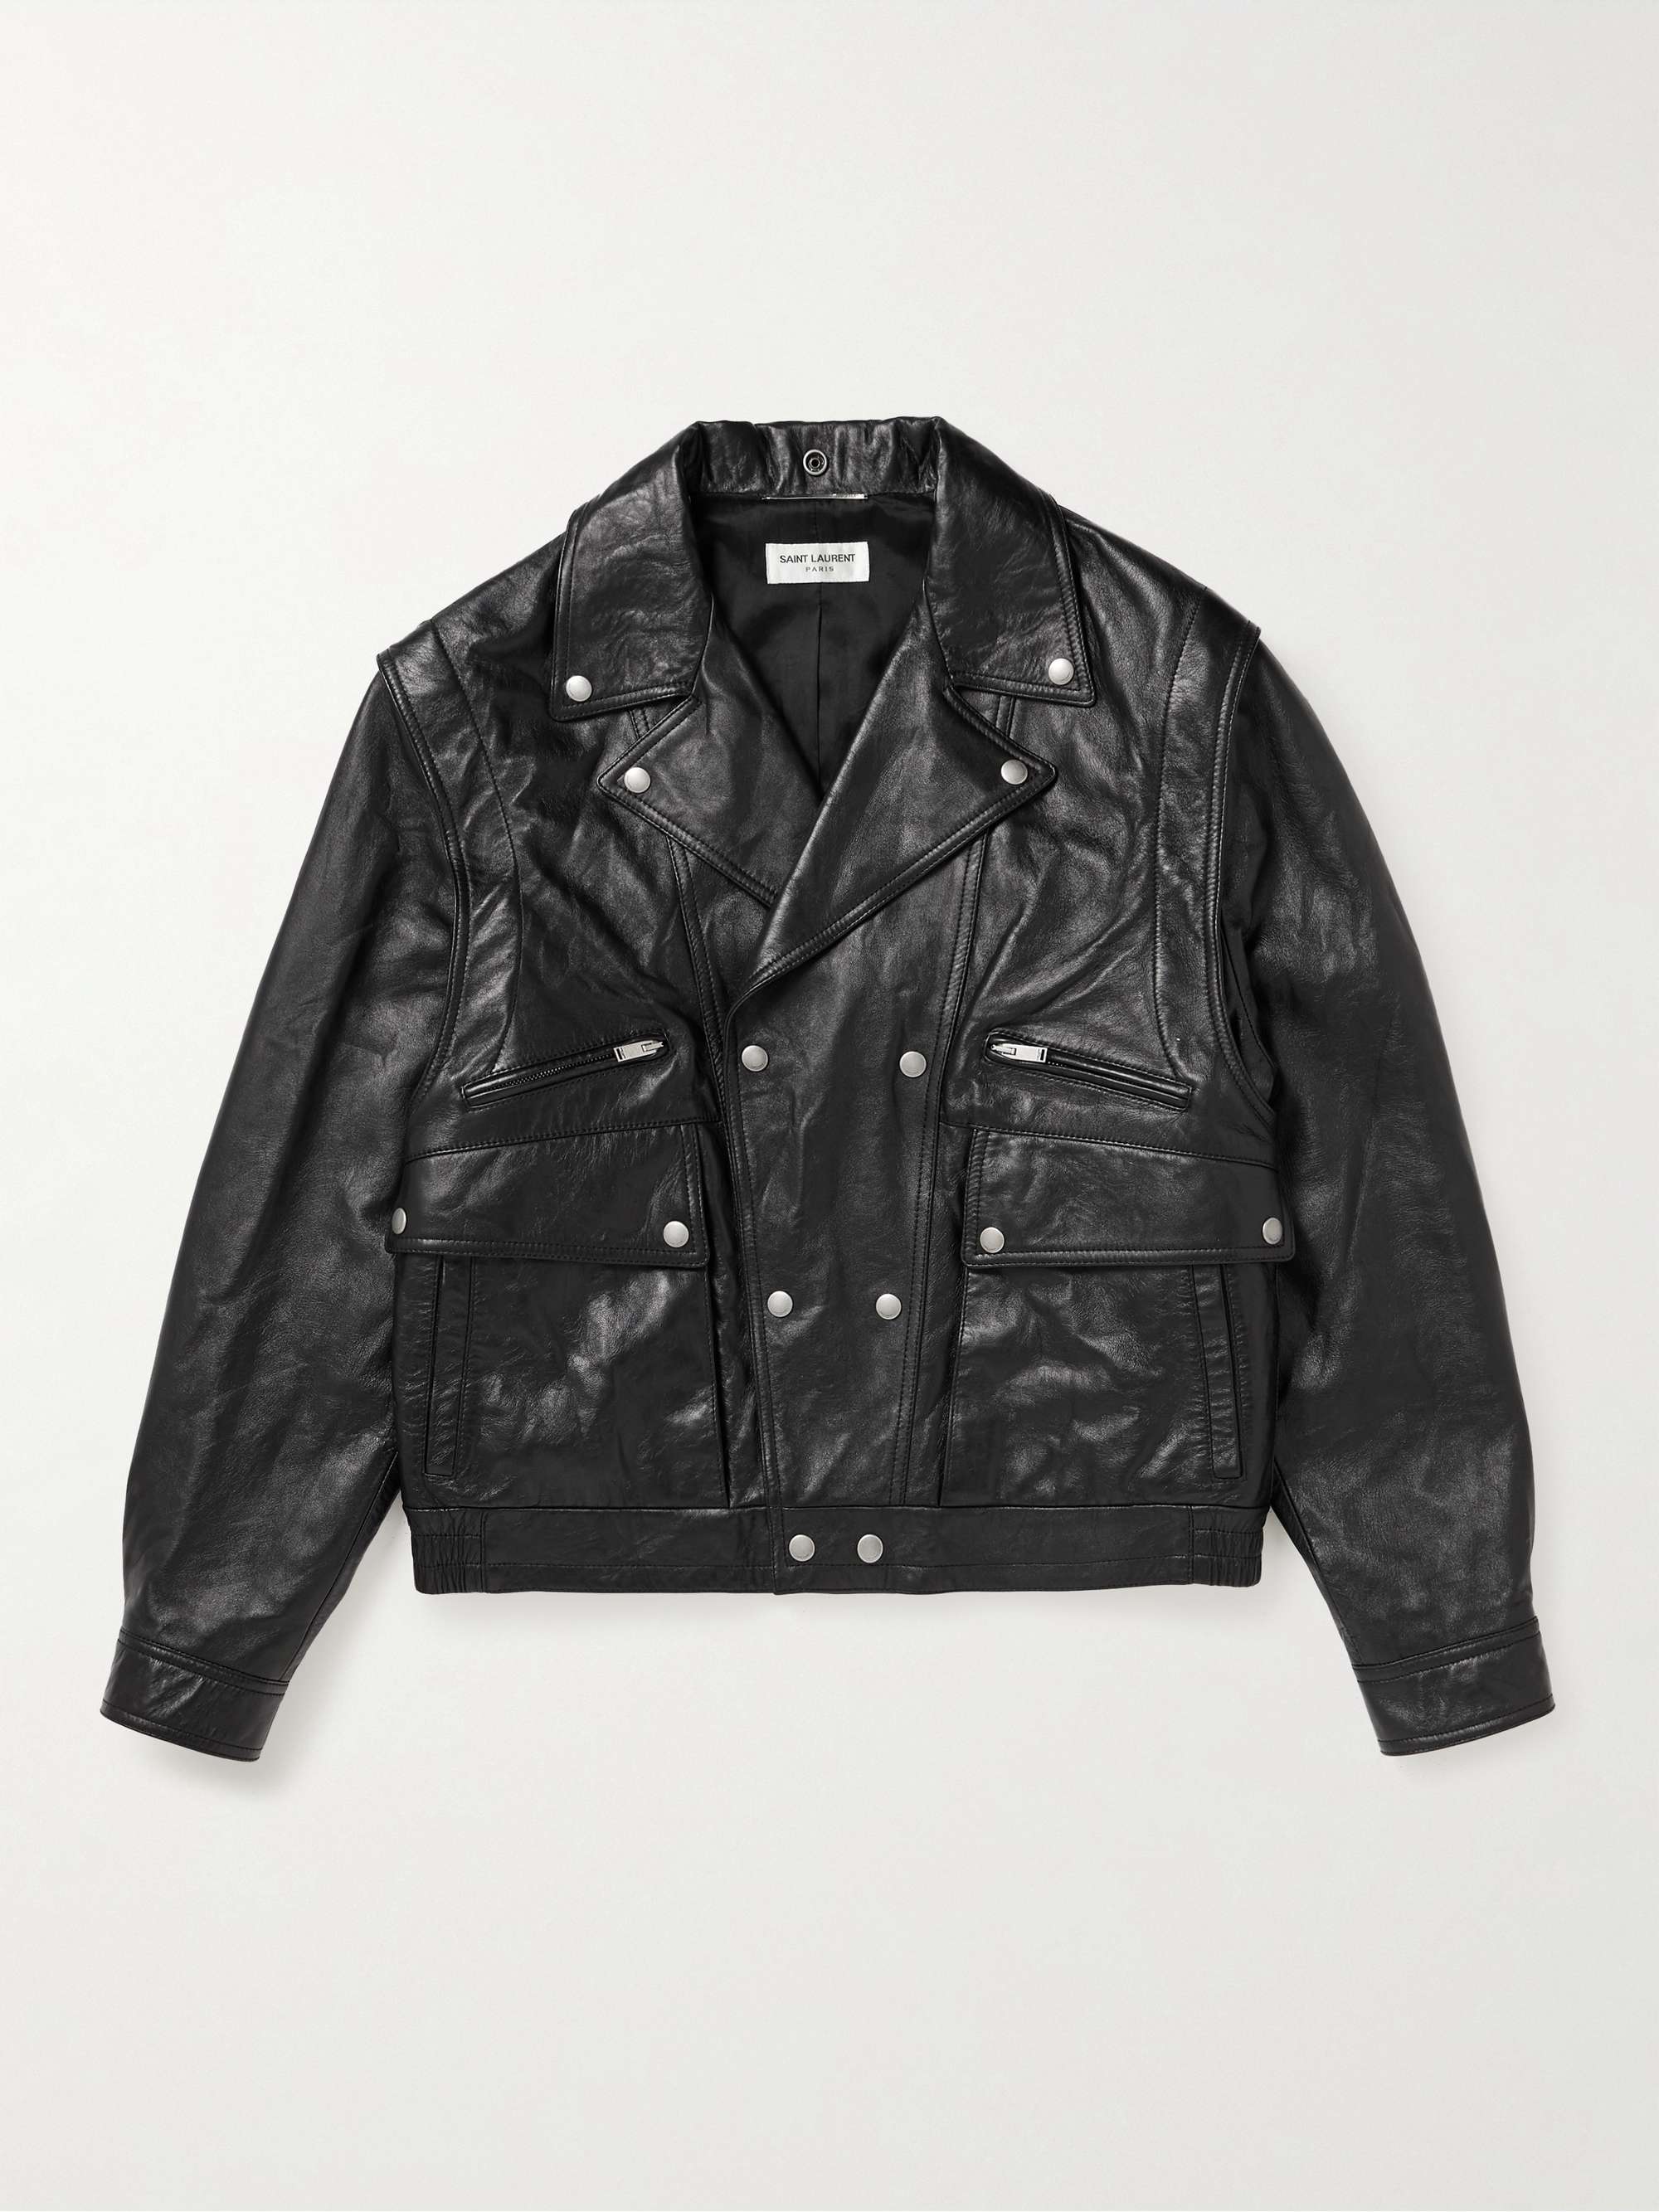 SAINT LAURENT Leather Biker Jacket | MR PORTER